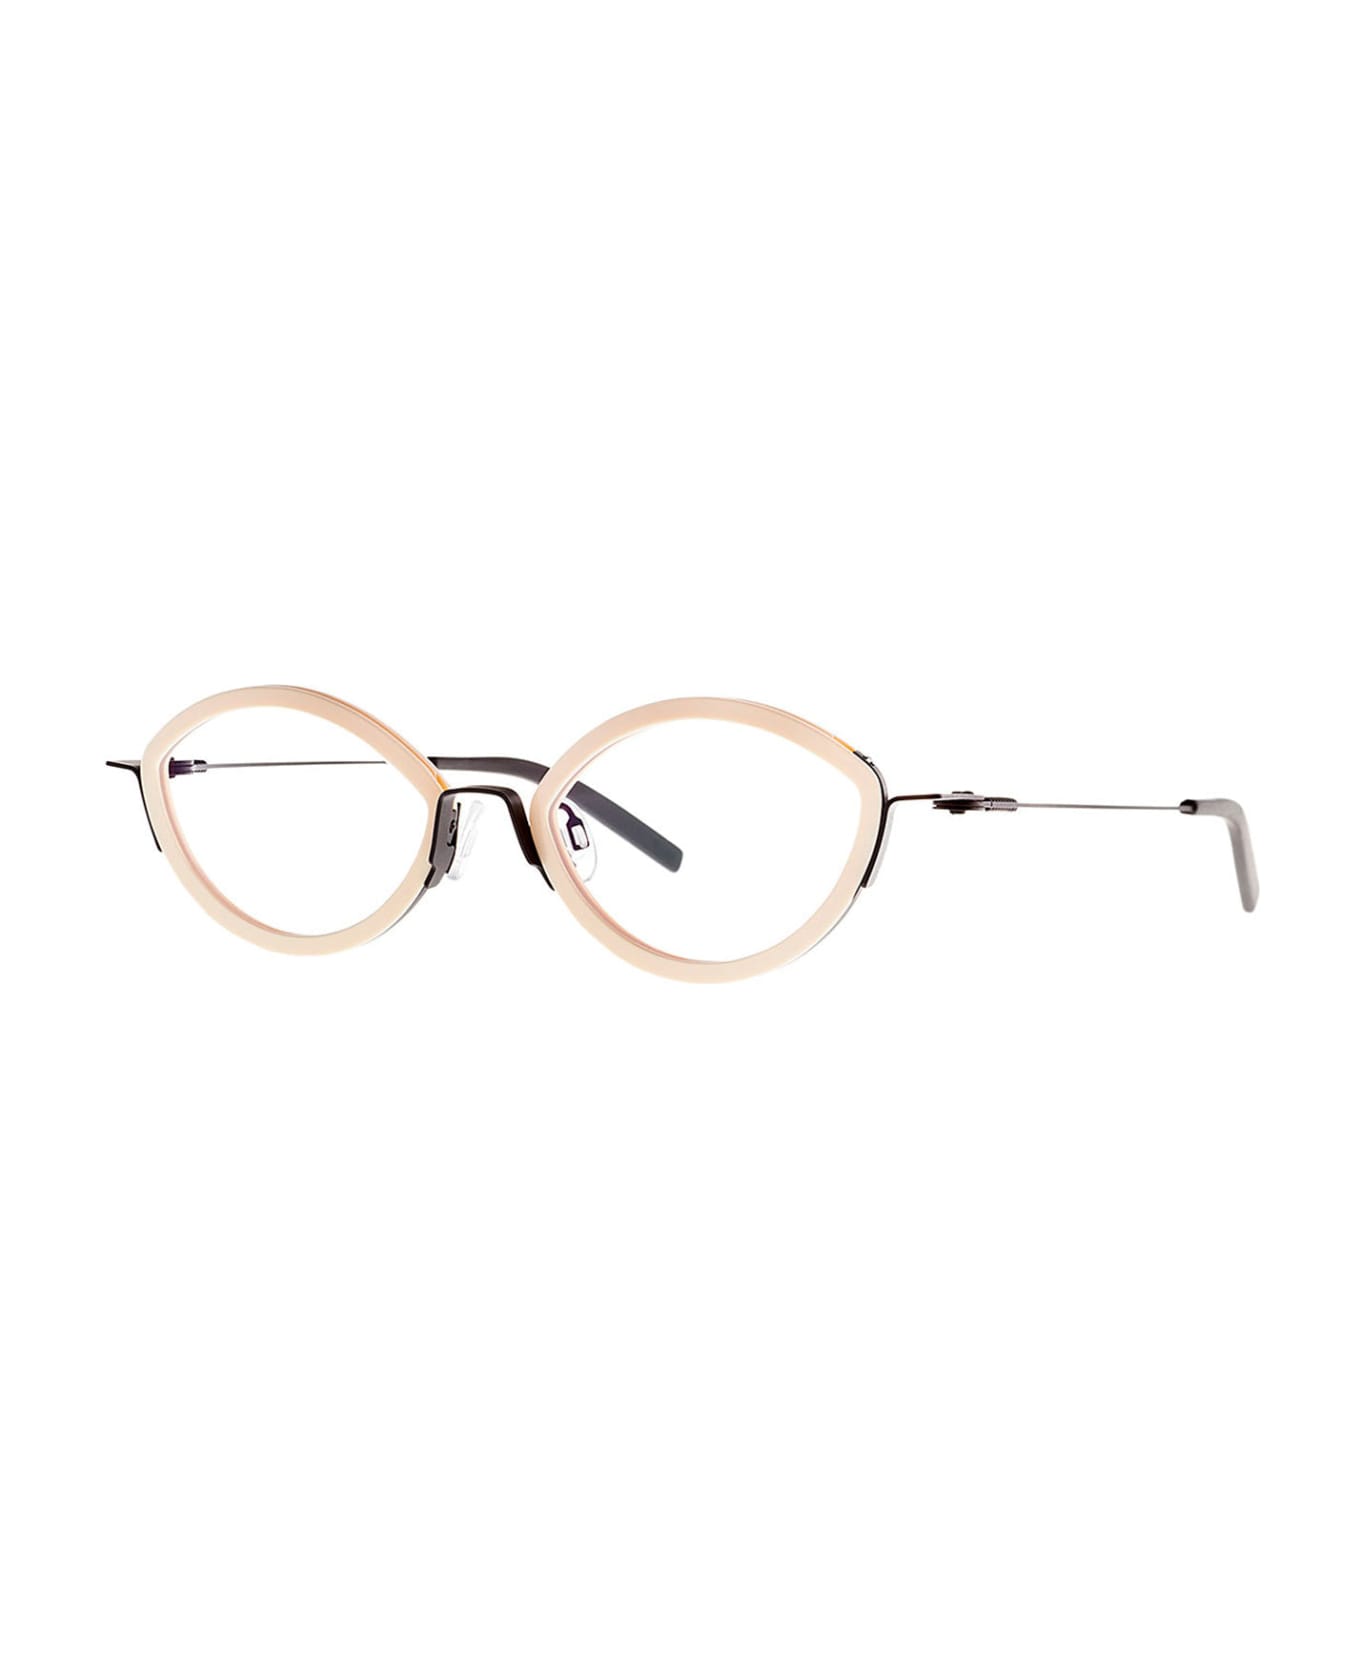 Theo Eyewear Trinxat 41 Glasses - cream/black アイウェア